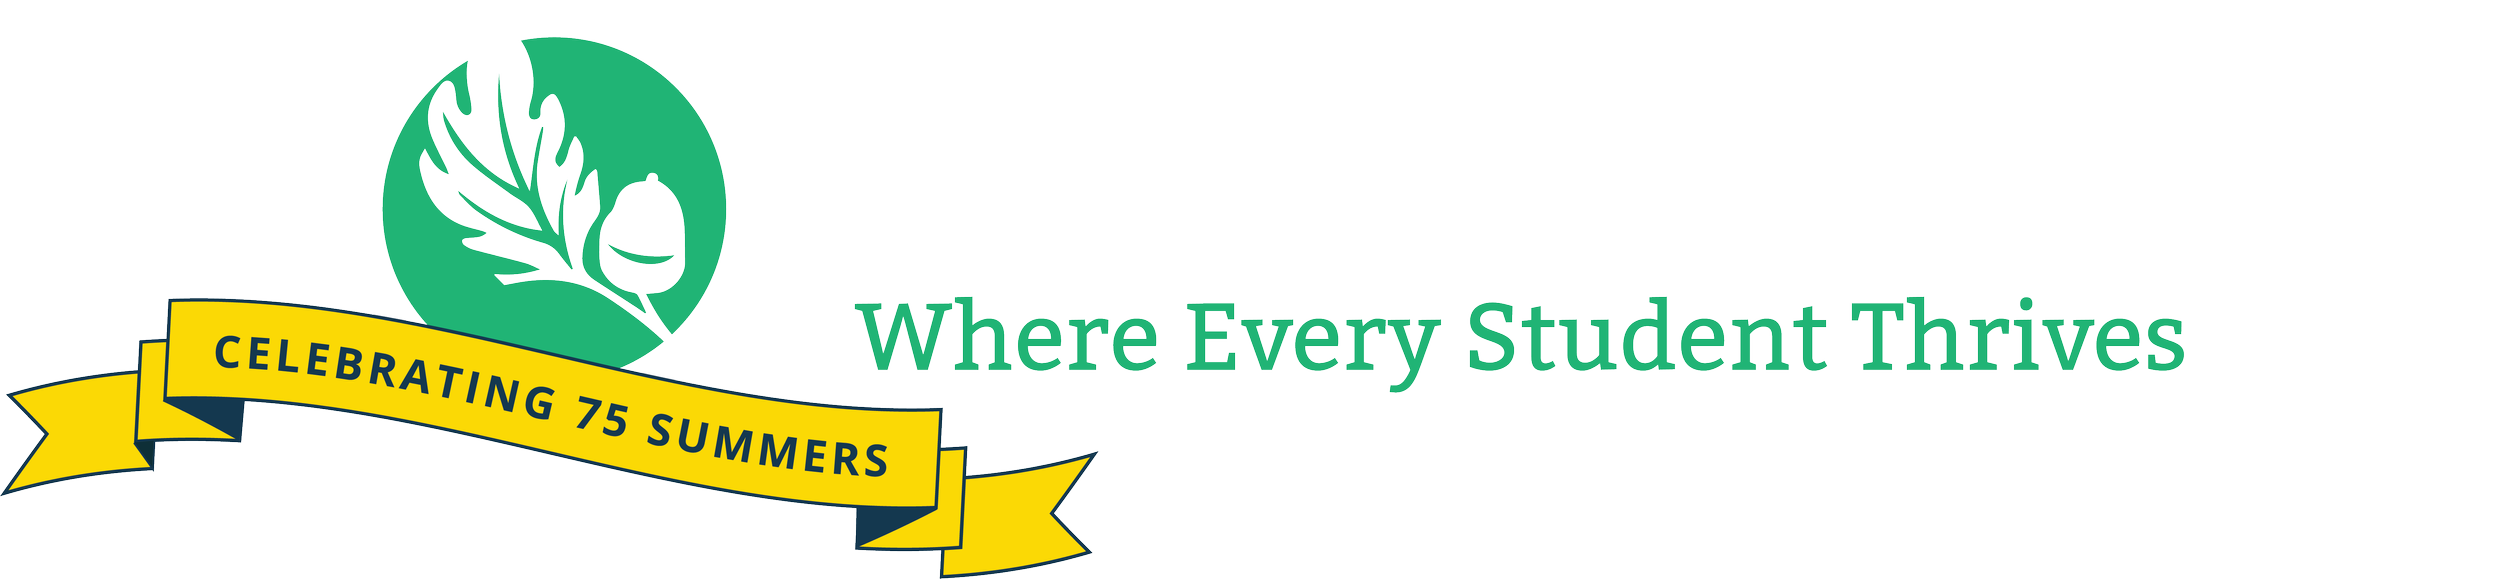 Oakland School